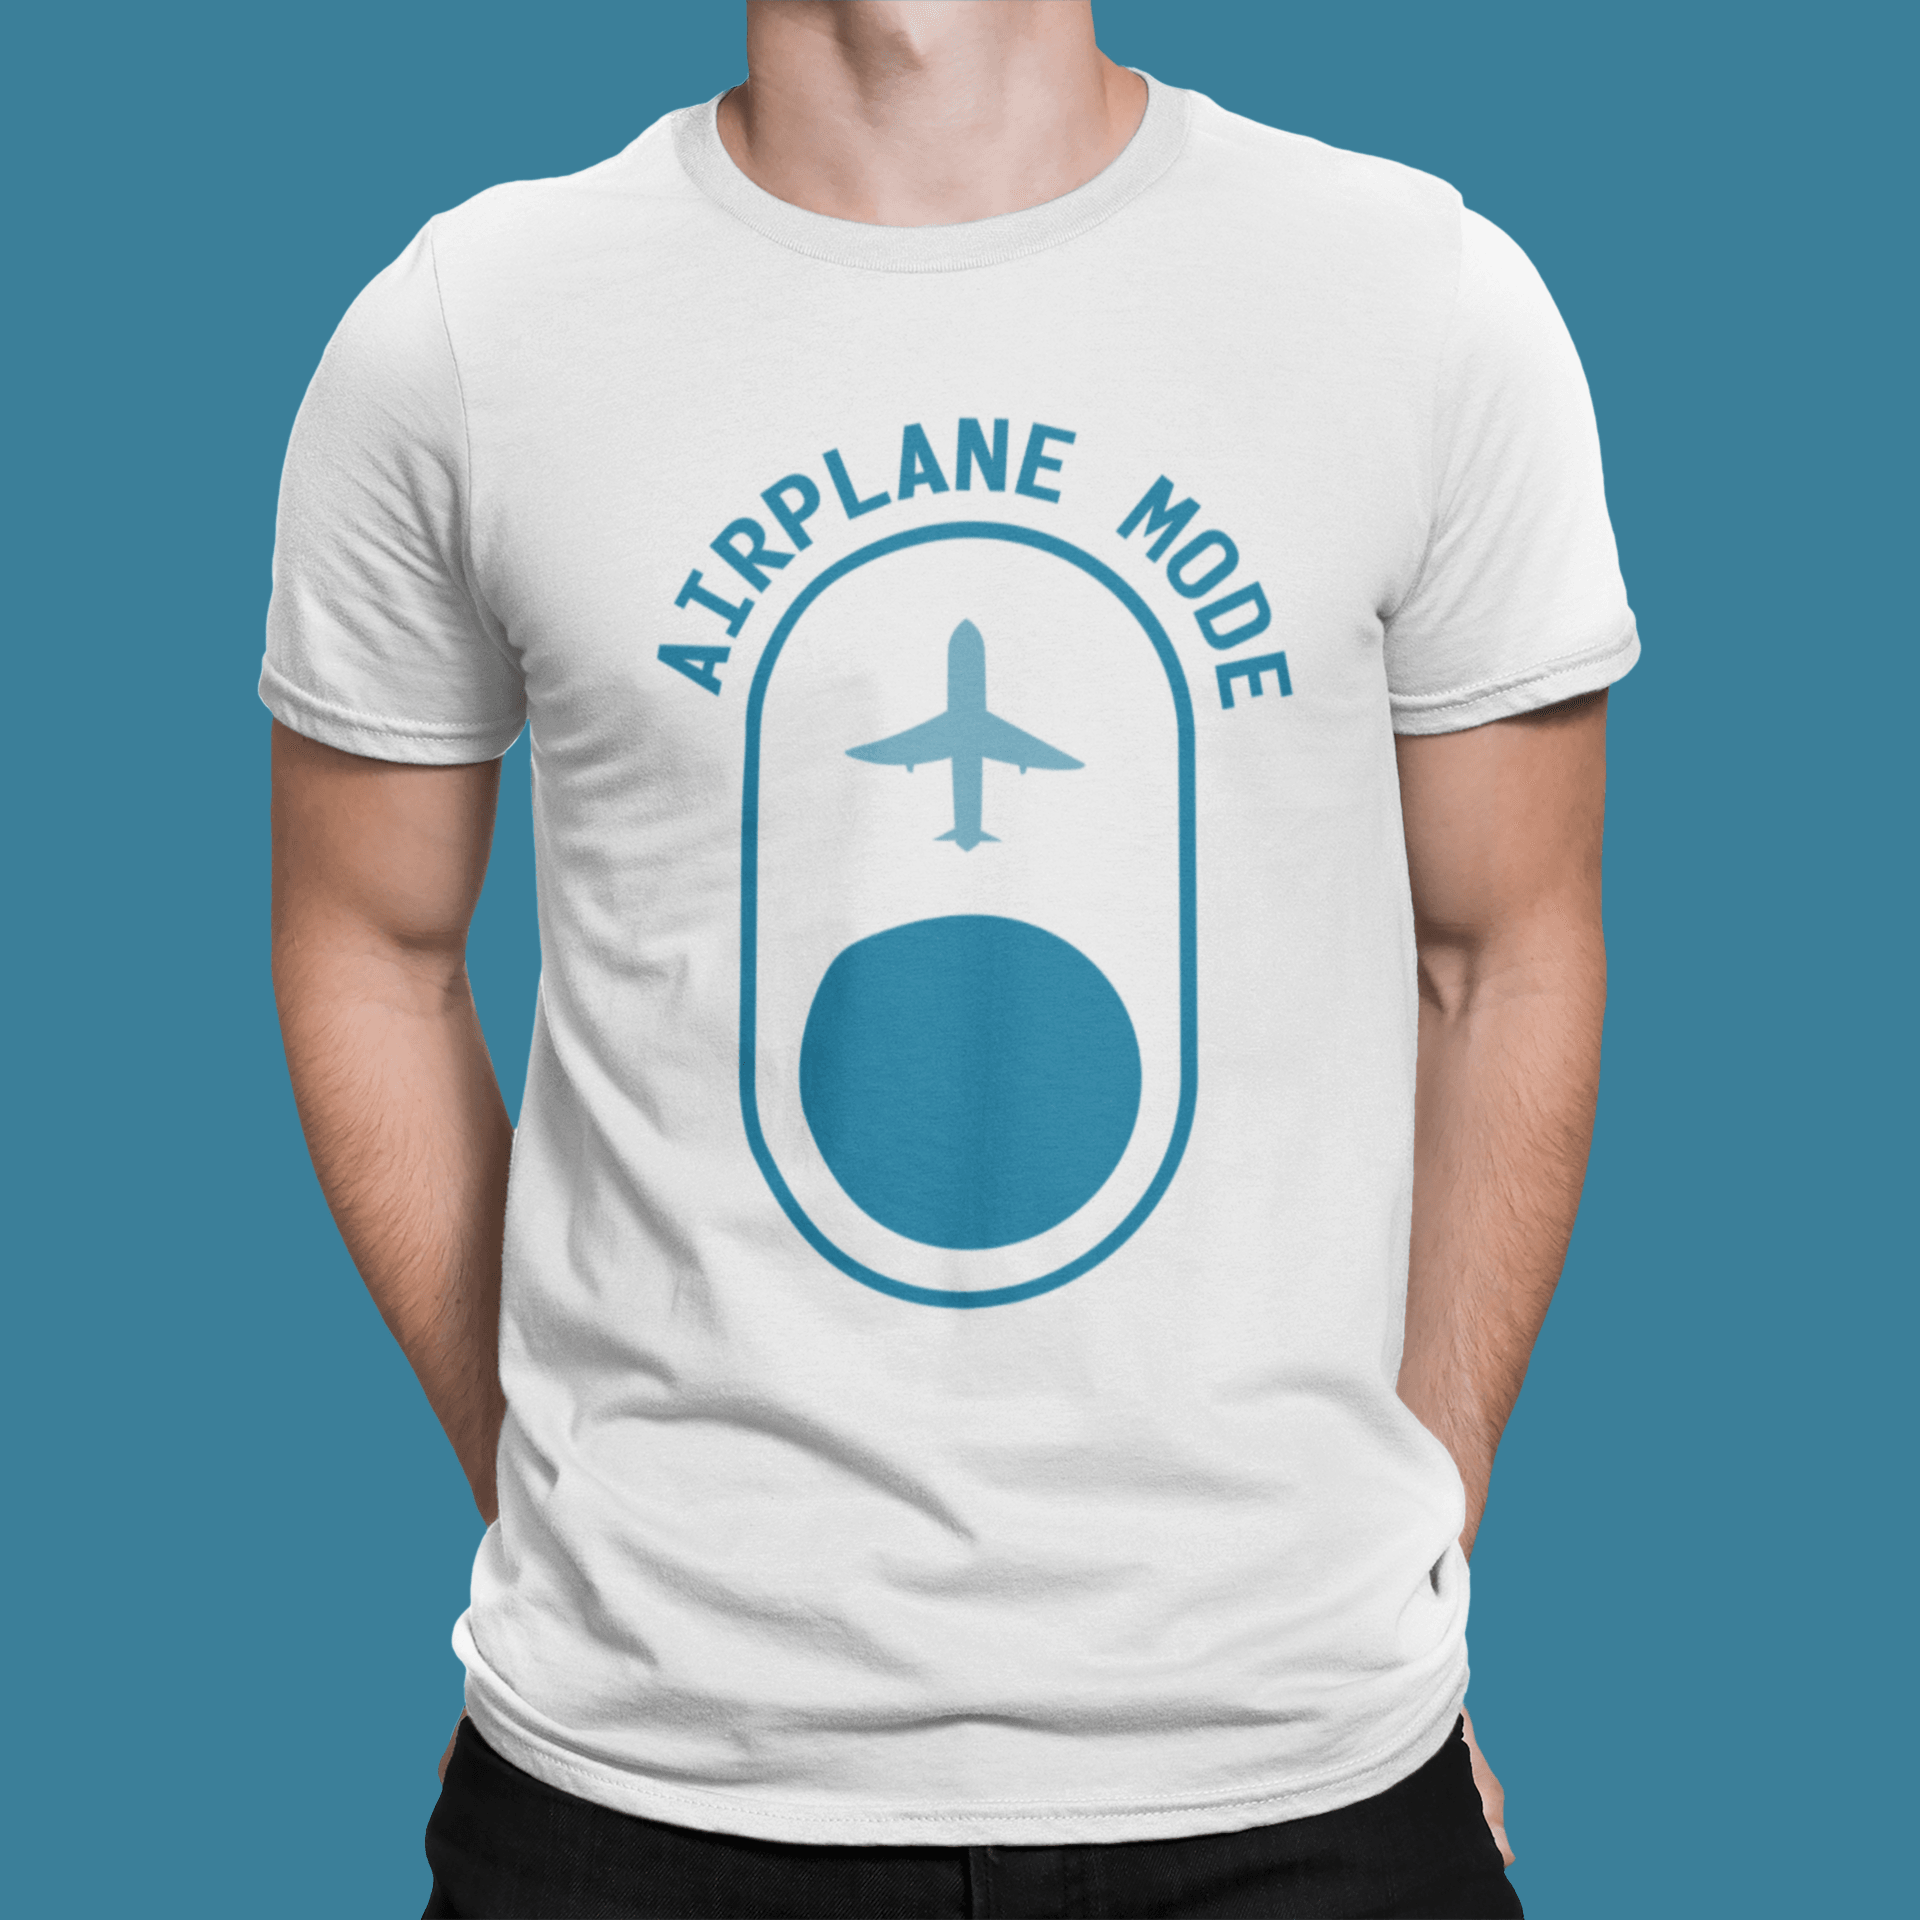 Airplane Mode White T-Shirt For Men - ATOM